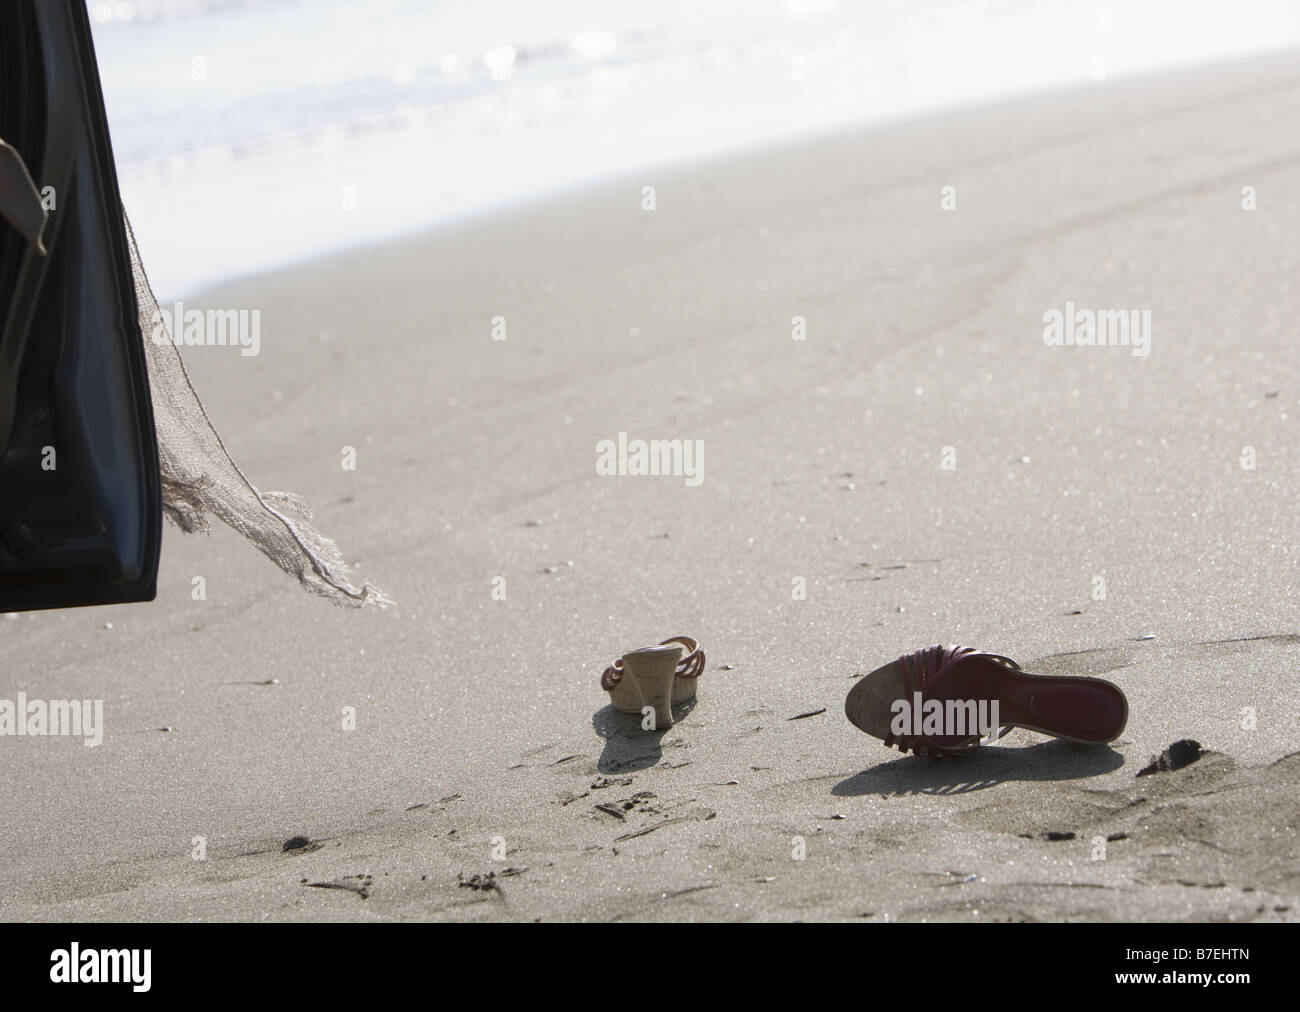 Sandals on a sandy beach Stock Photo